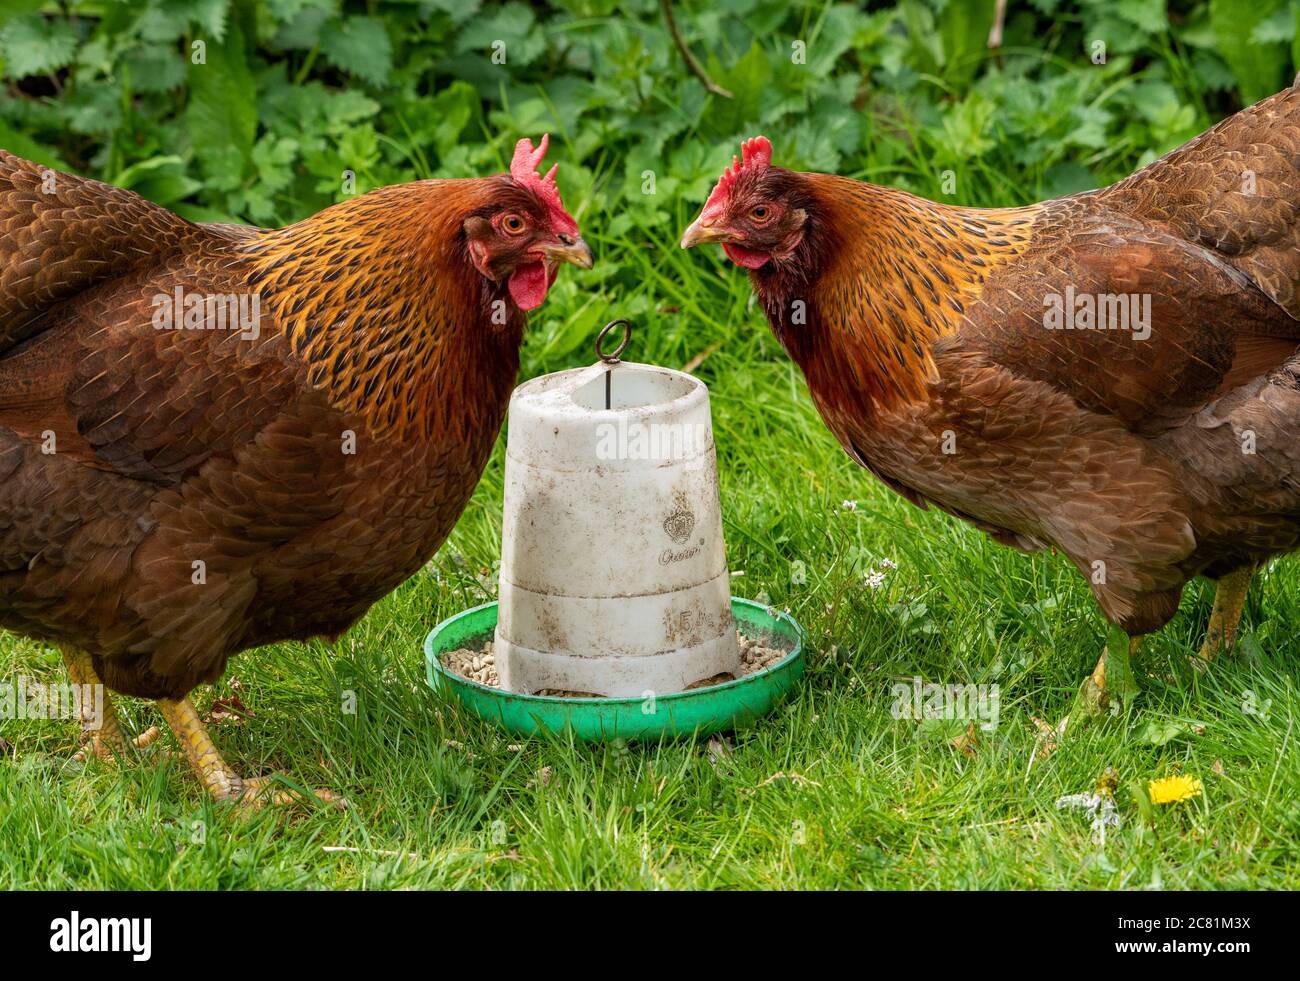 Welsummer hens and plastic feeder, Chipping, Preston, Lancashire, England, United Kingdom. Stock Photo